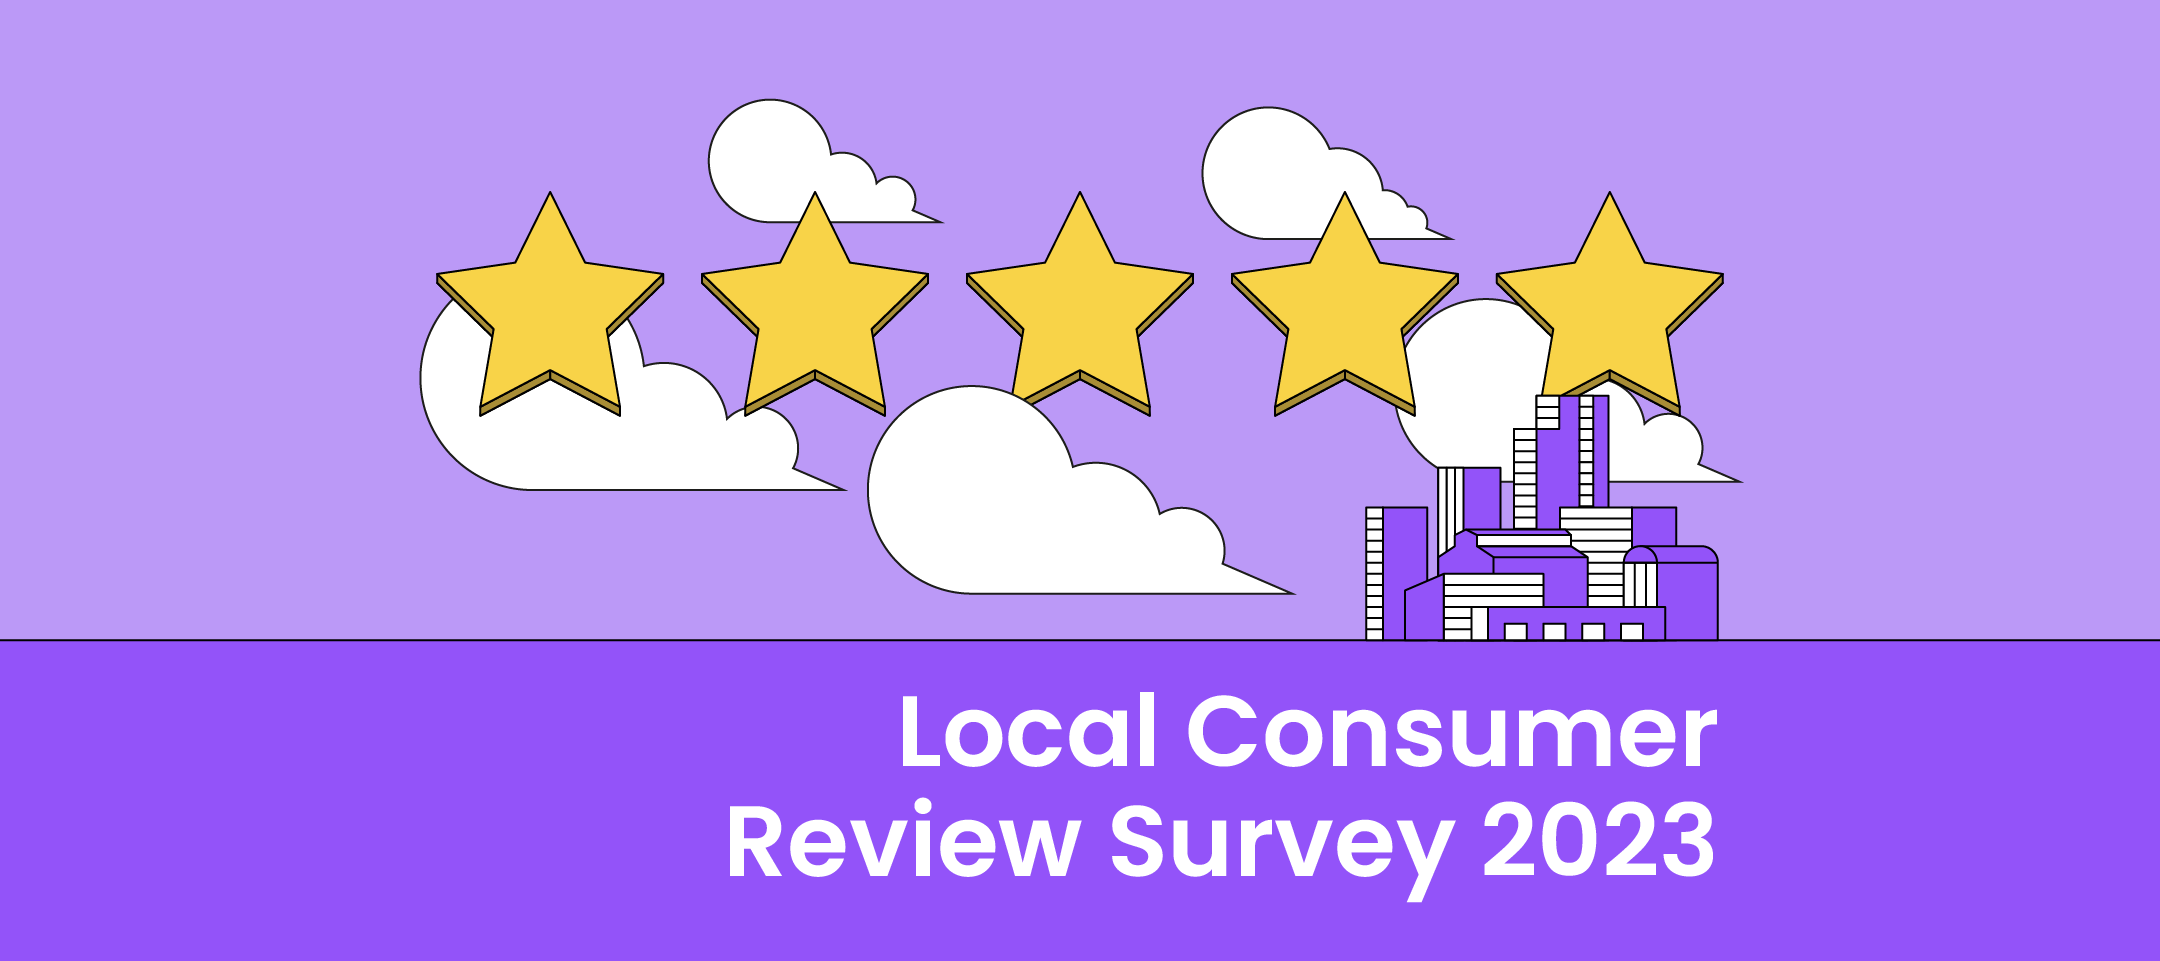 Local Consumer Review Survey 2023: Customer Reviews and Behavior